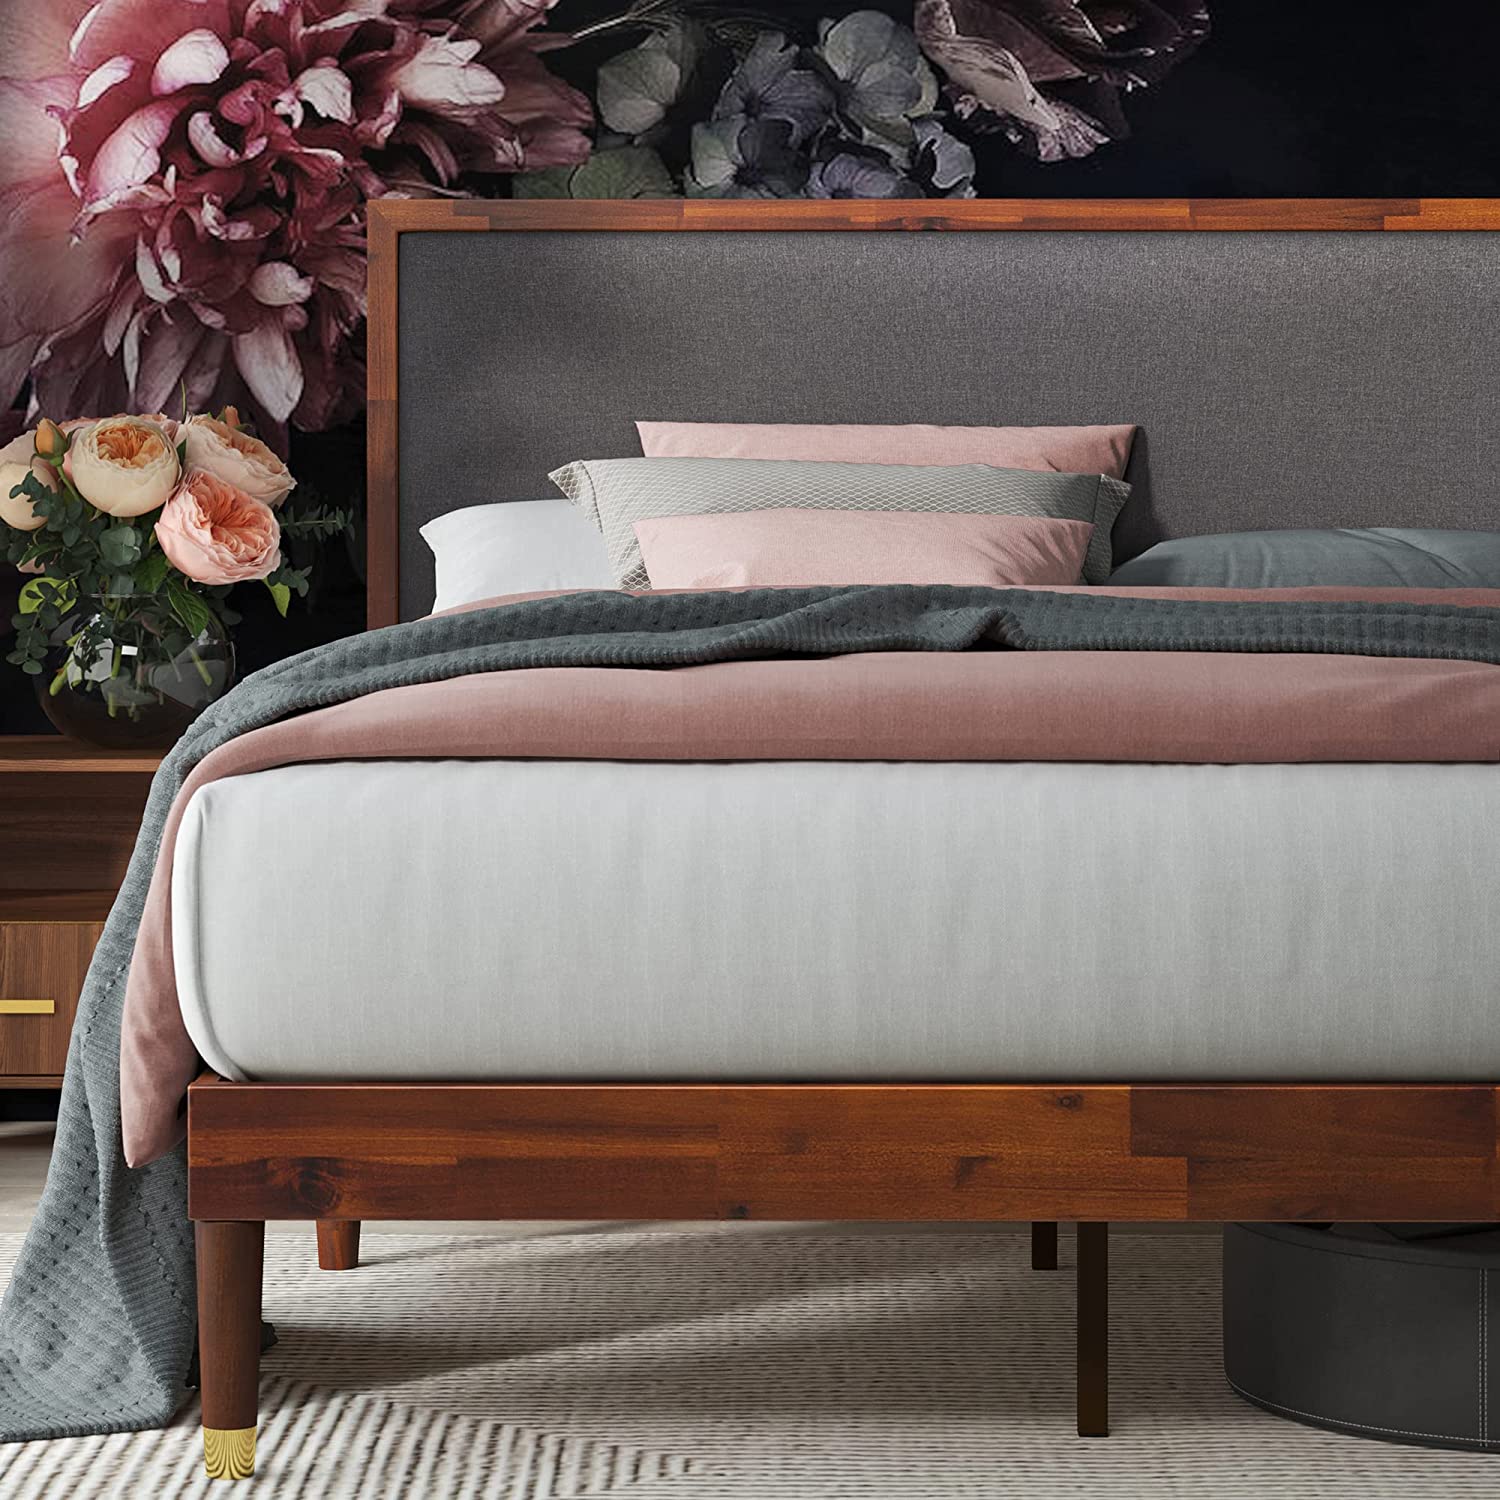 ZINUS Raymond Wood Platform Bed Frame with Adjustable Upholstered Headboard, Brown